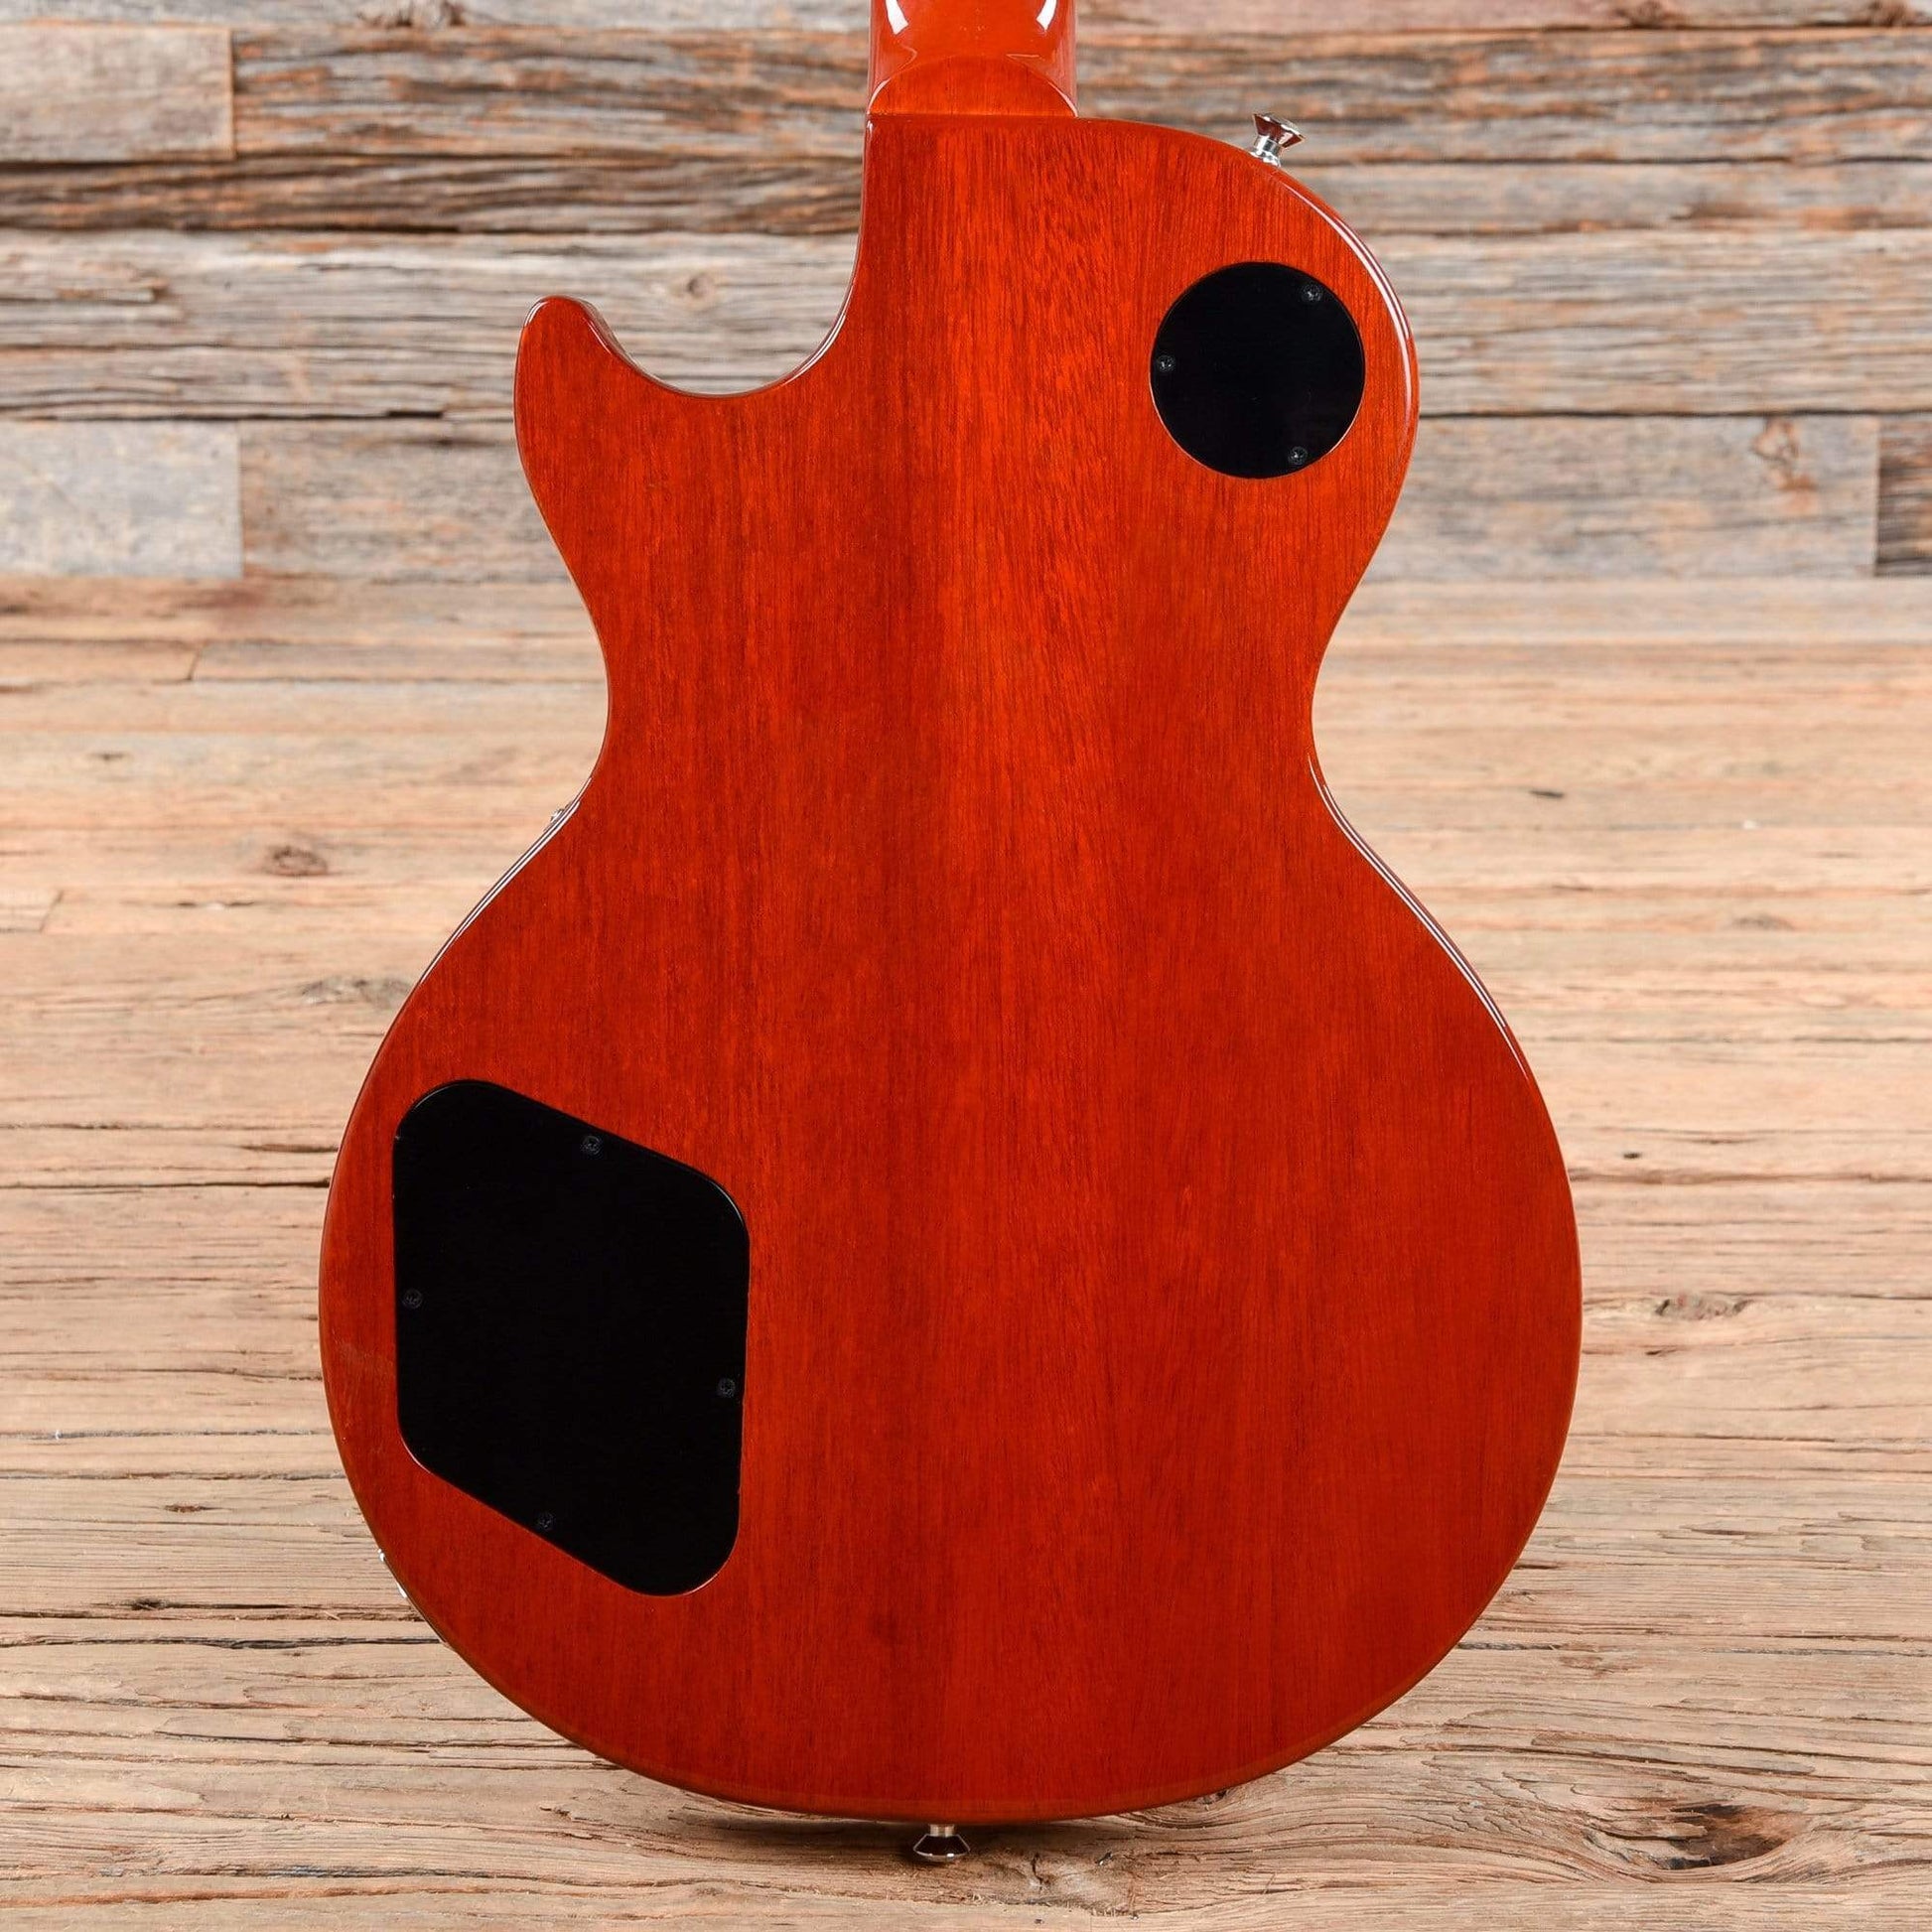 Gibson Les Paul Studio Tangerine Burst 2019 Electric Guitars / Solid Body